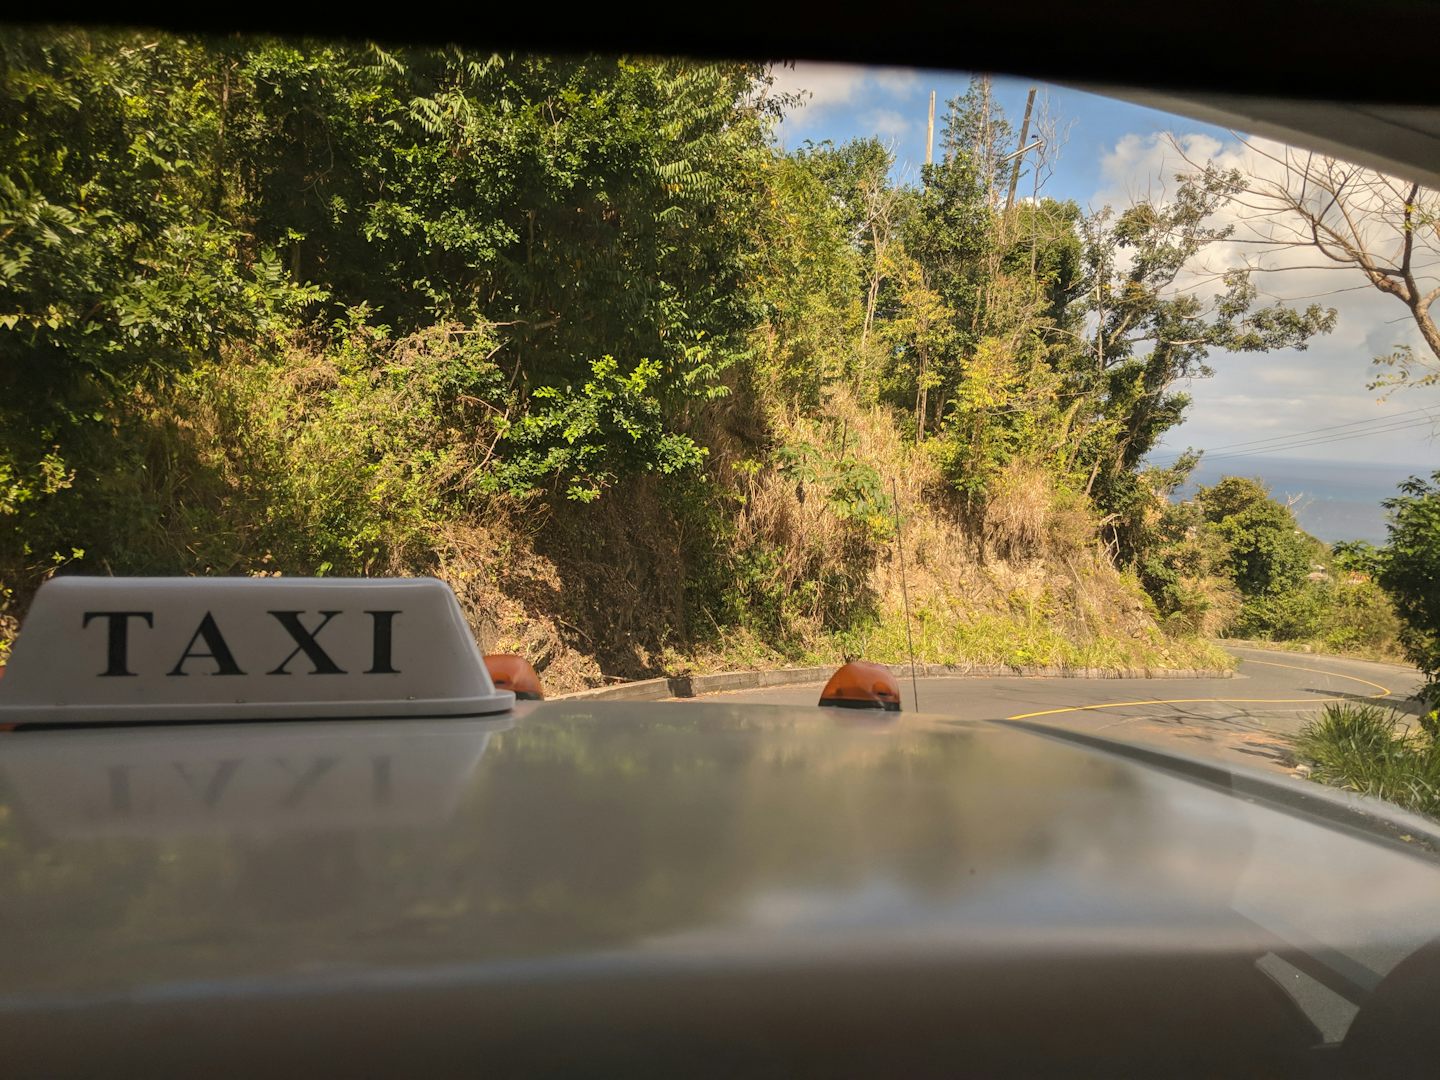 Taxi ride in Tortola